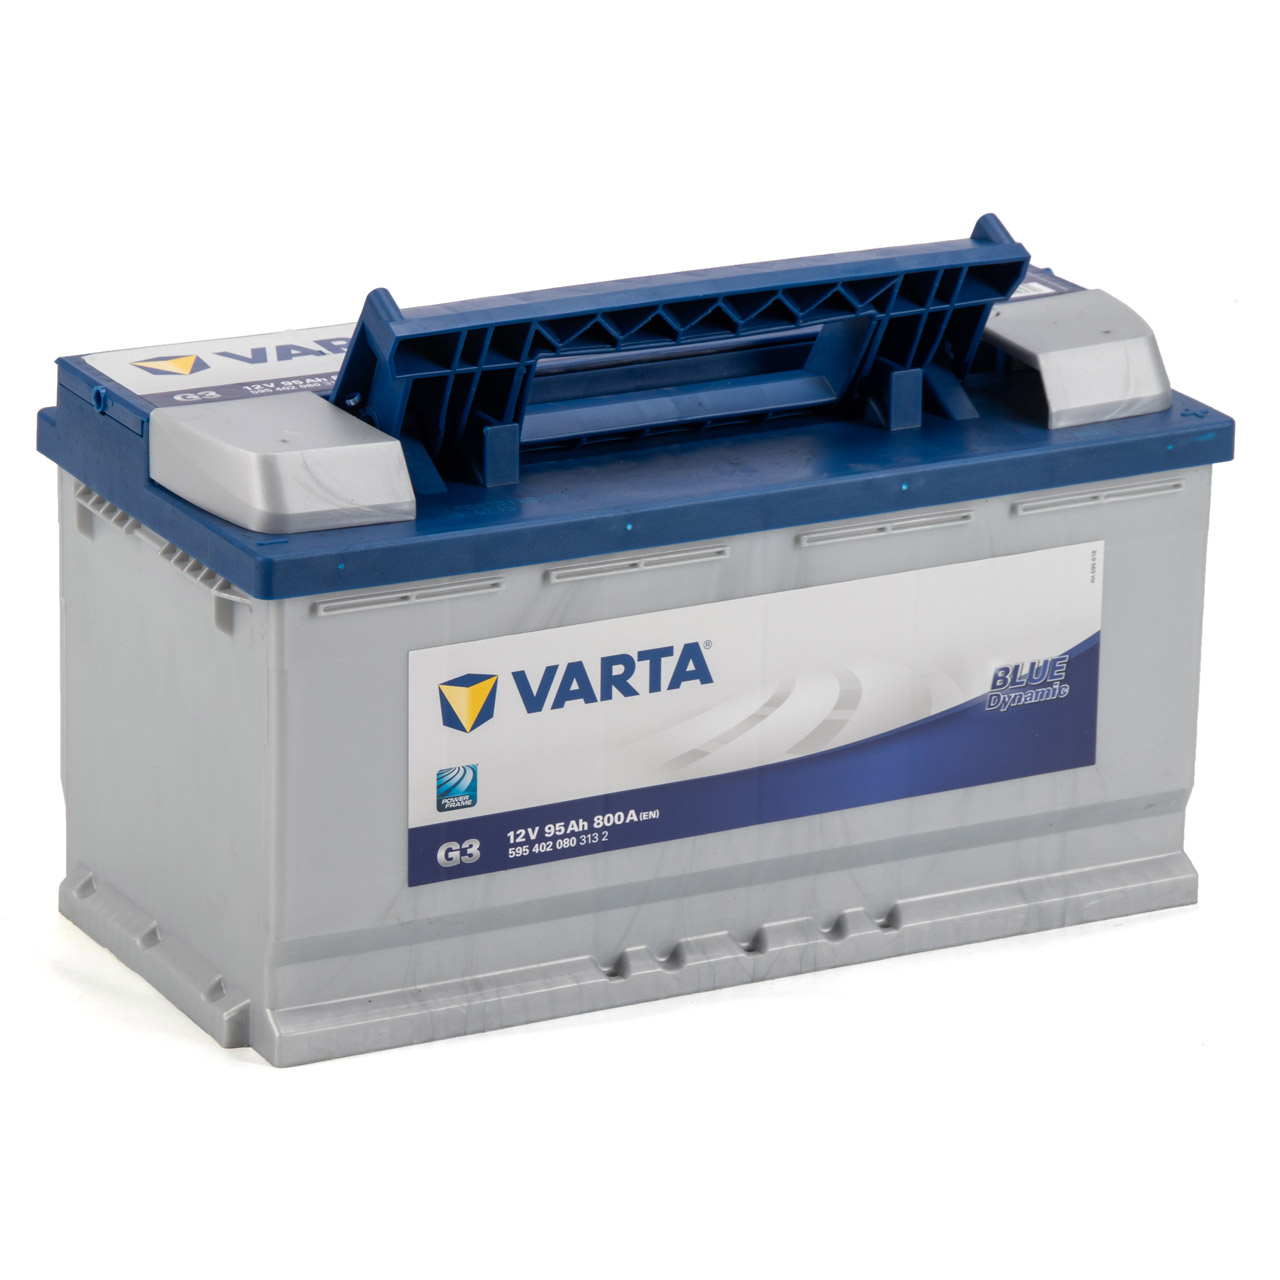 VARTA BLUE dynamic G3 Autobatterie Batterie Starterbatterie 12V 95Ah 800A